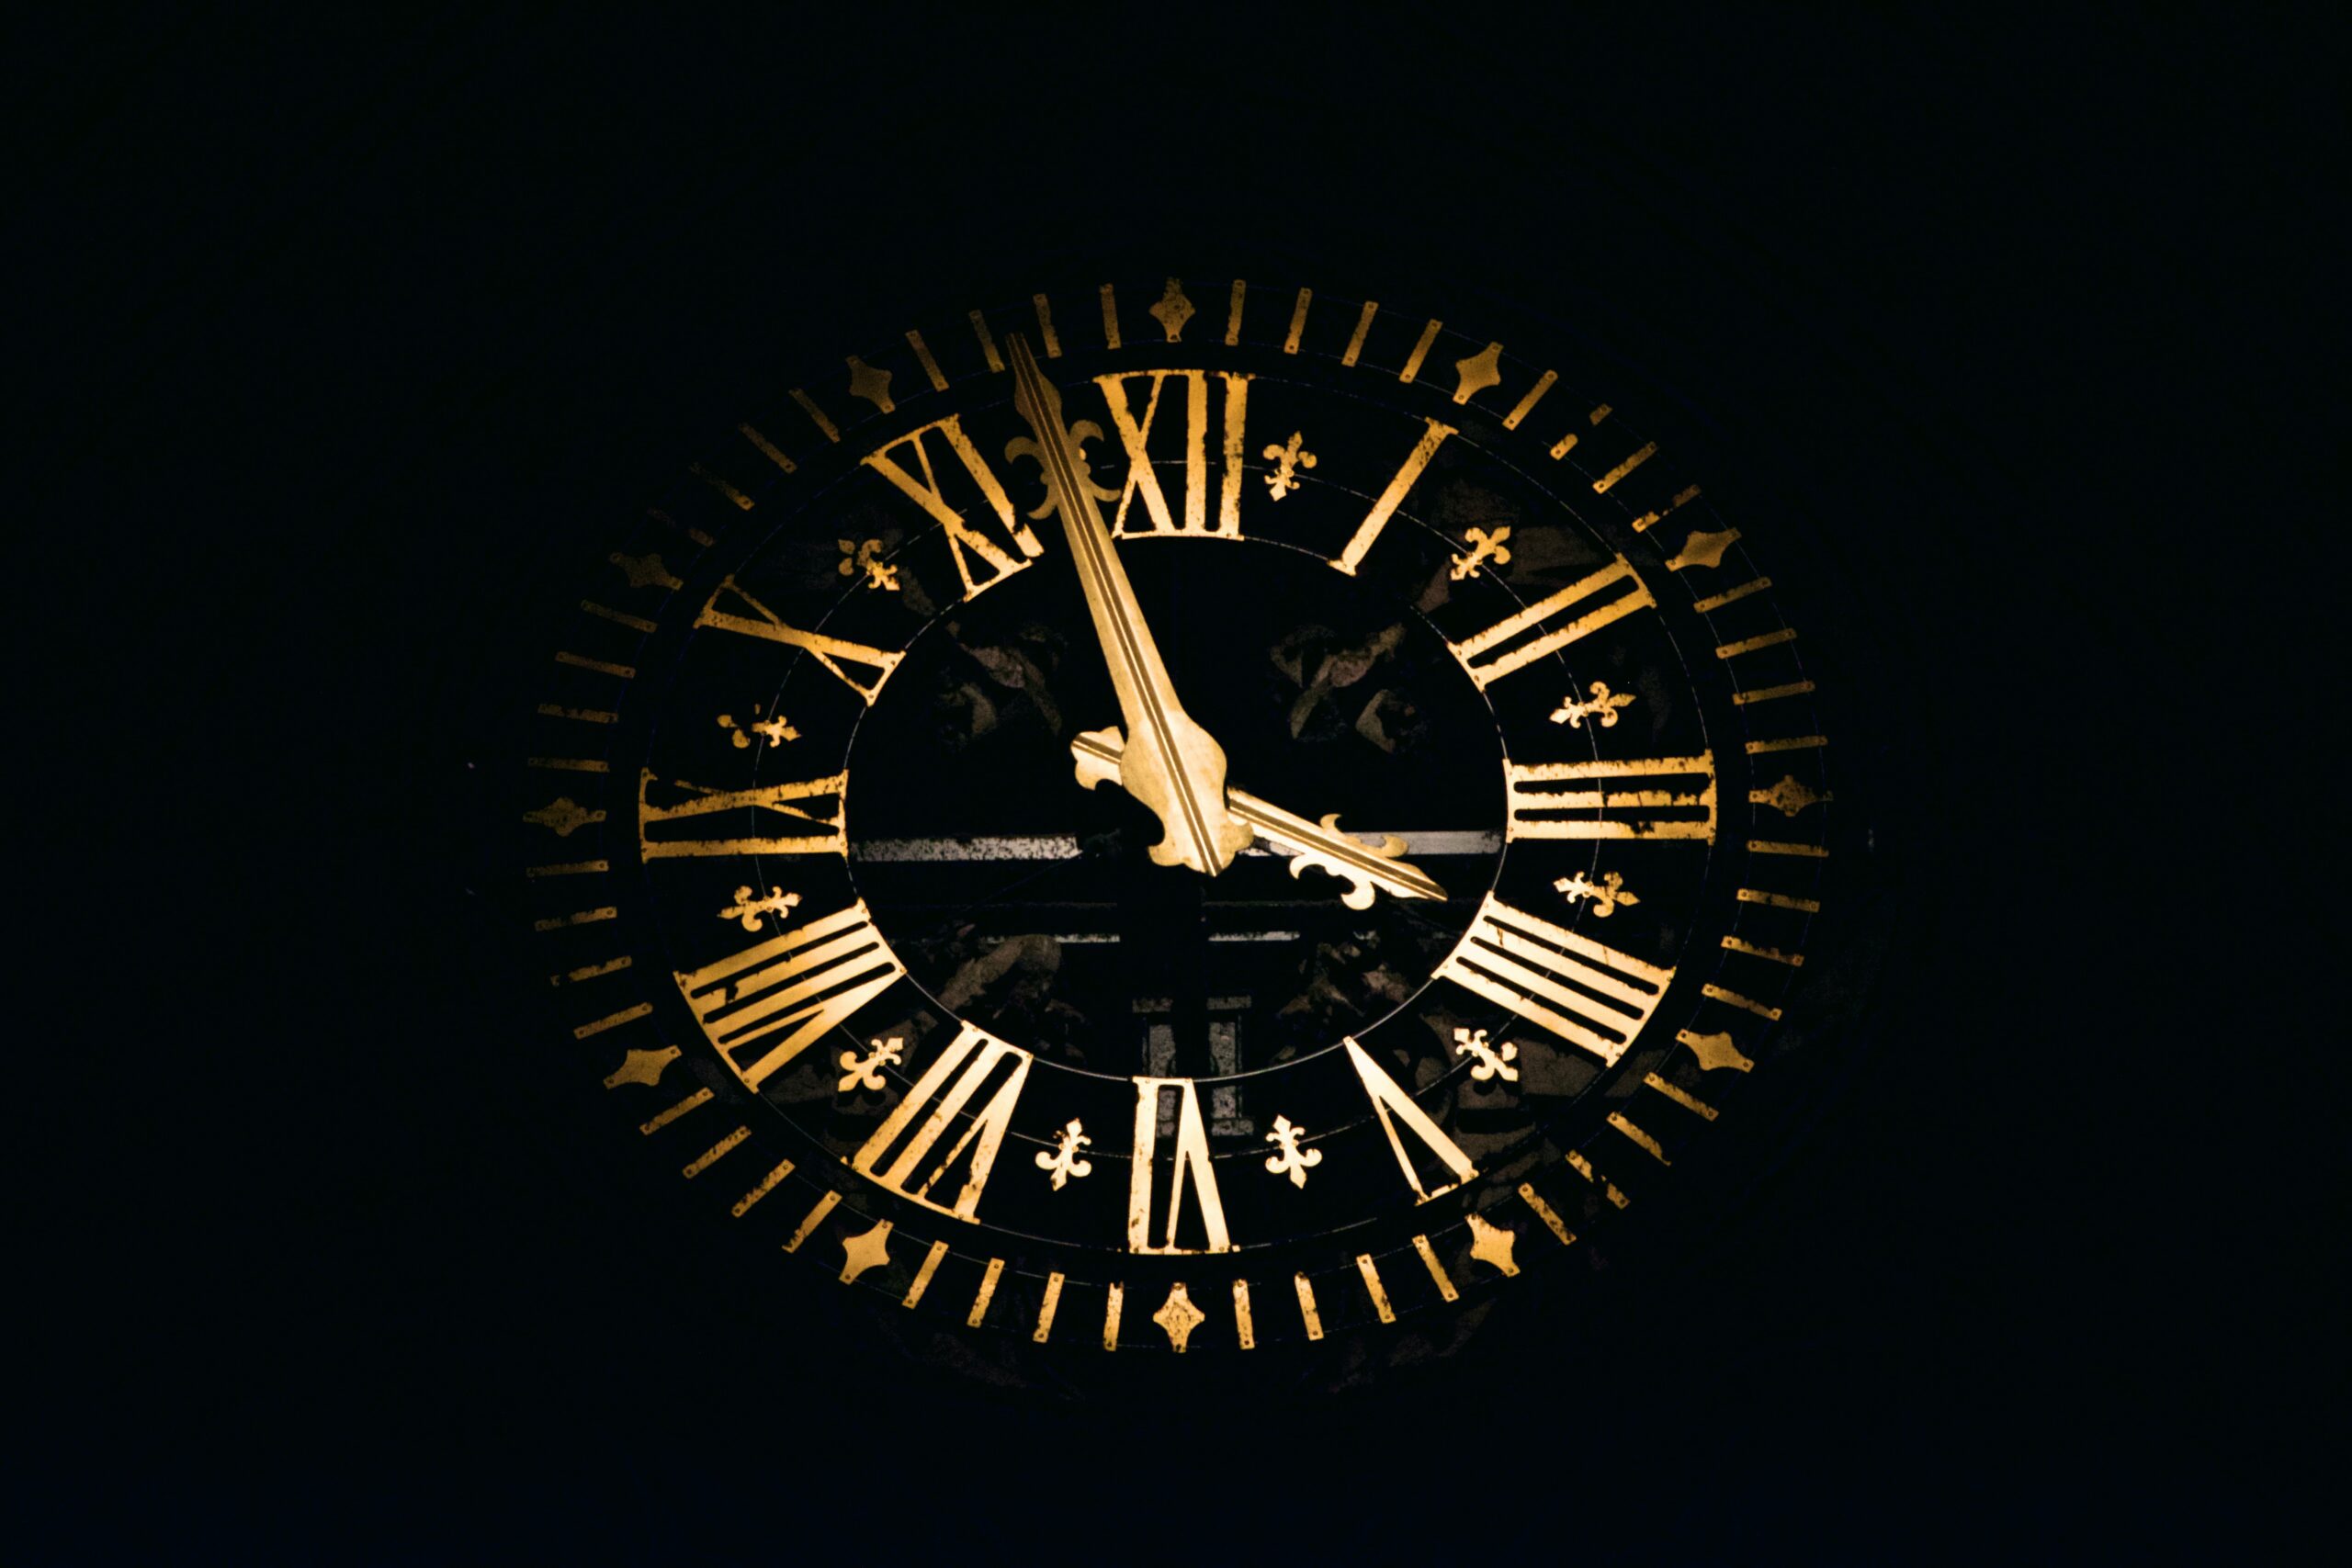 round black and brown analog clock